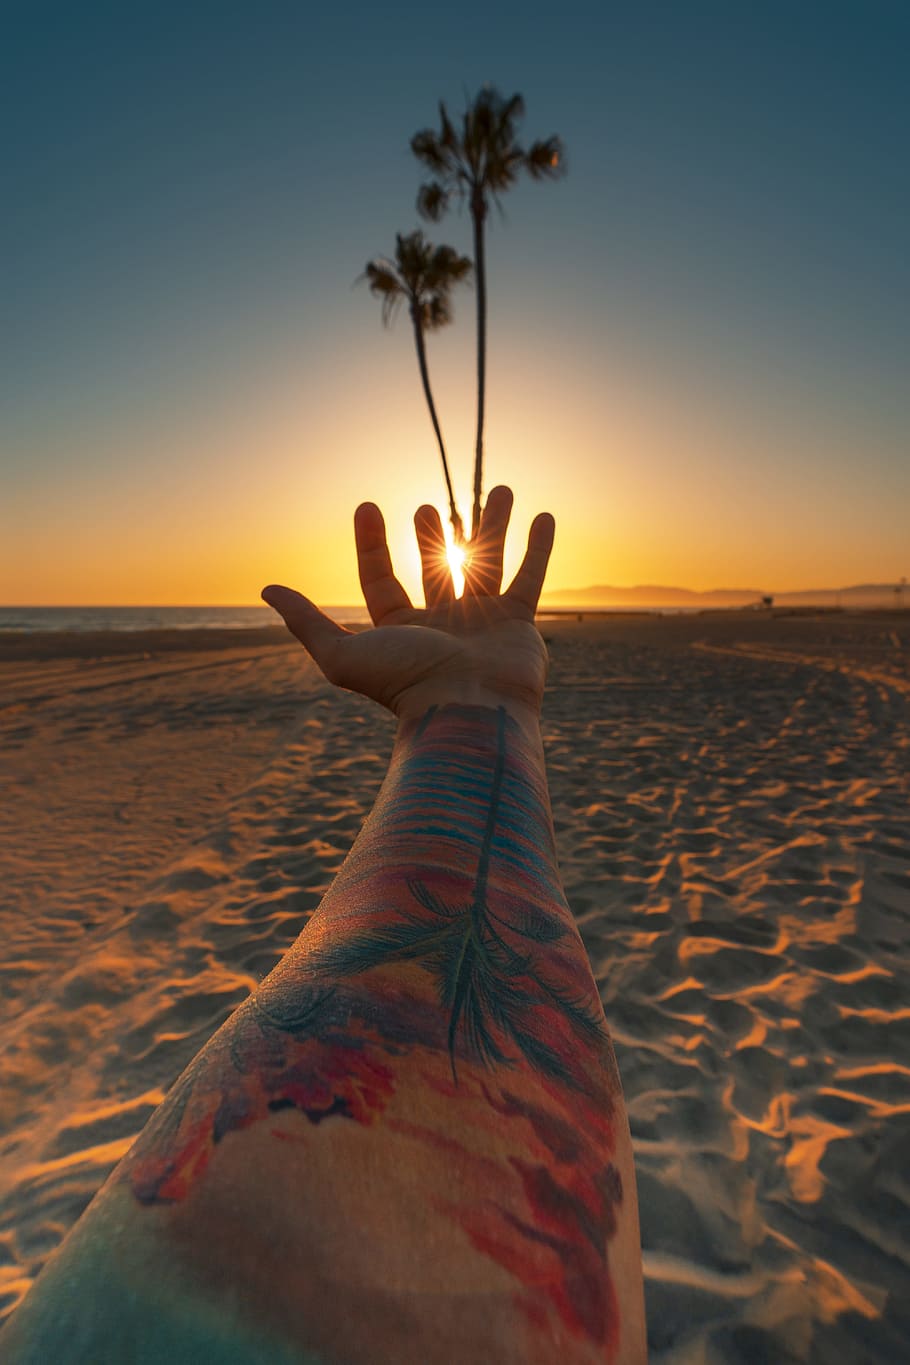 AI Image Generator Small palm tree finger tattoo